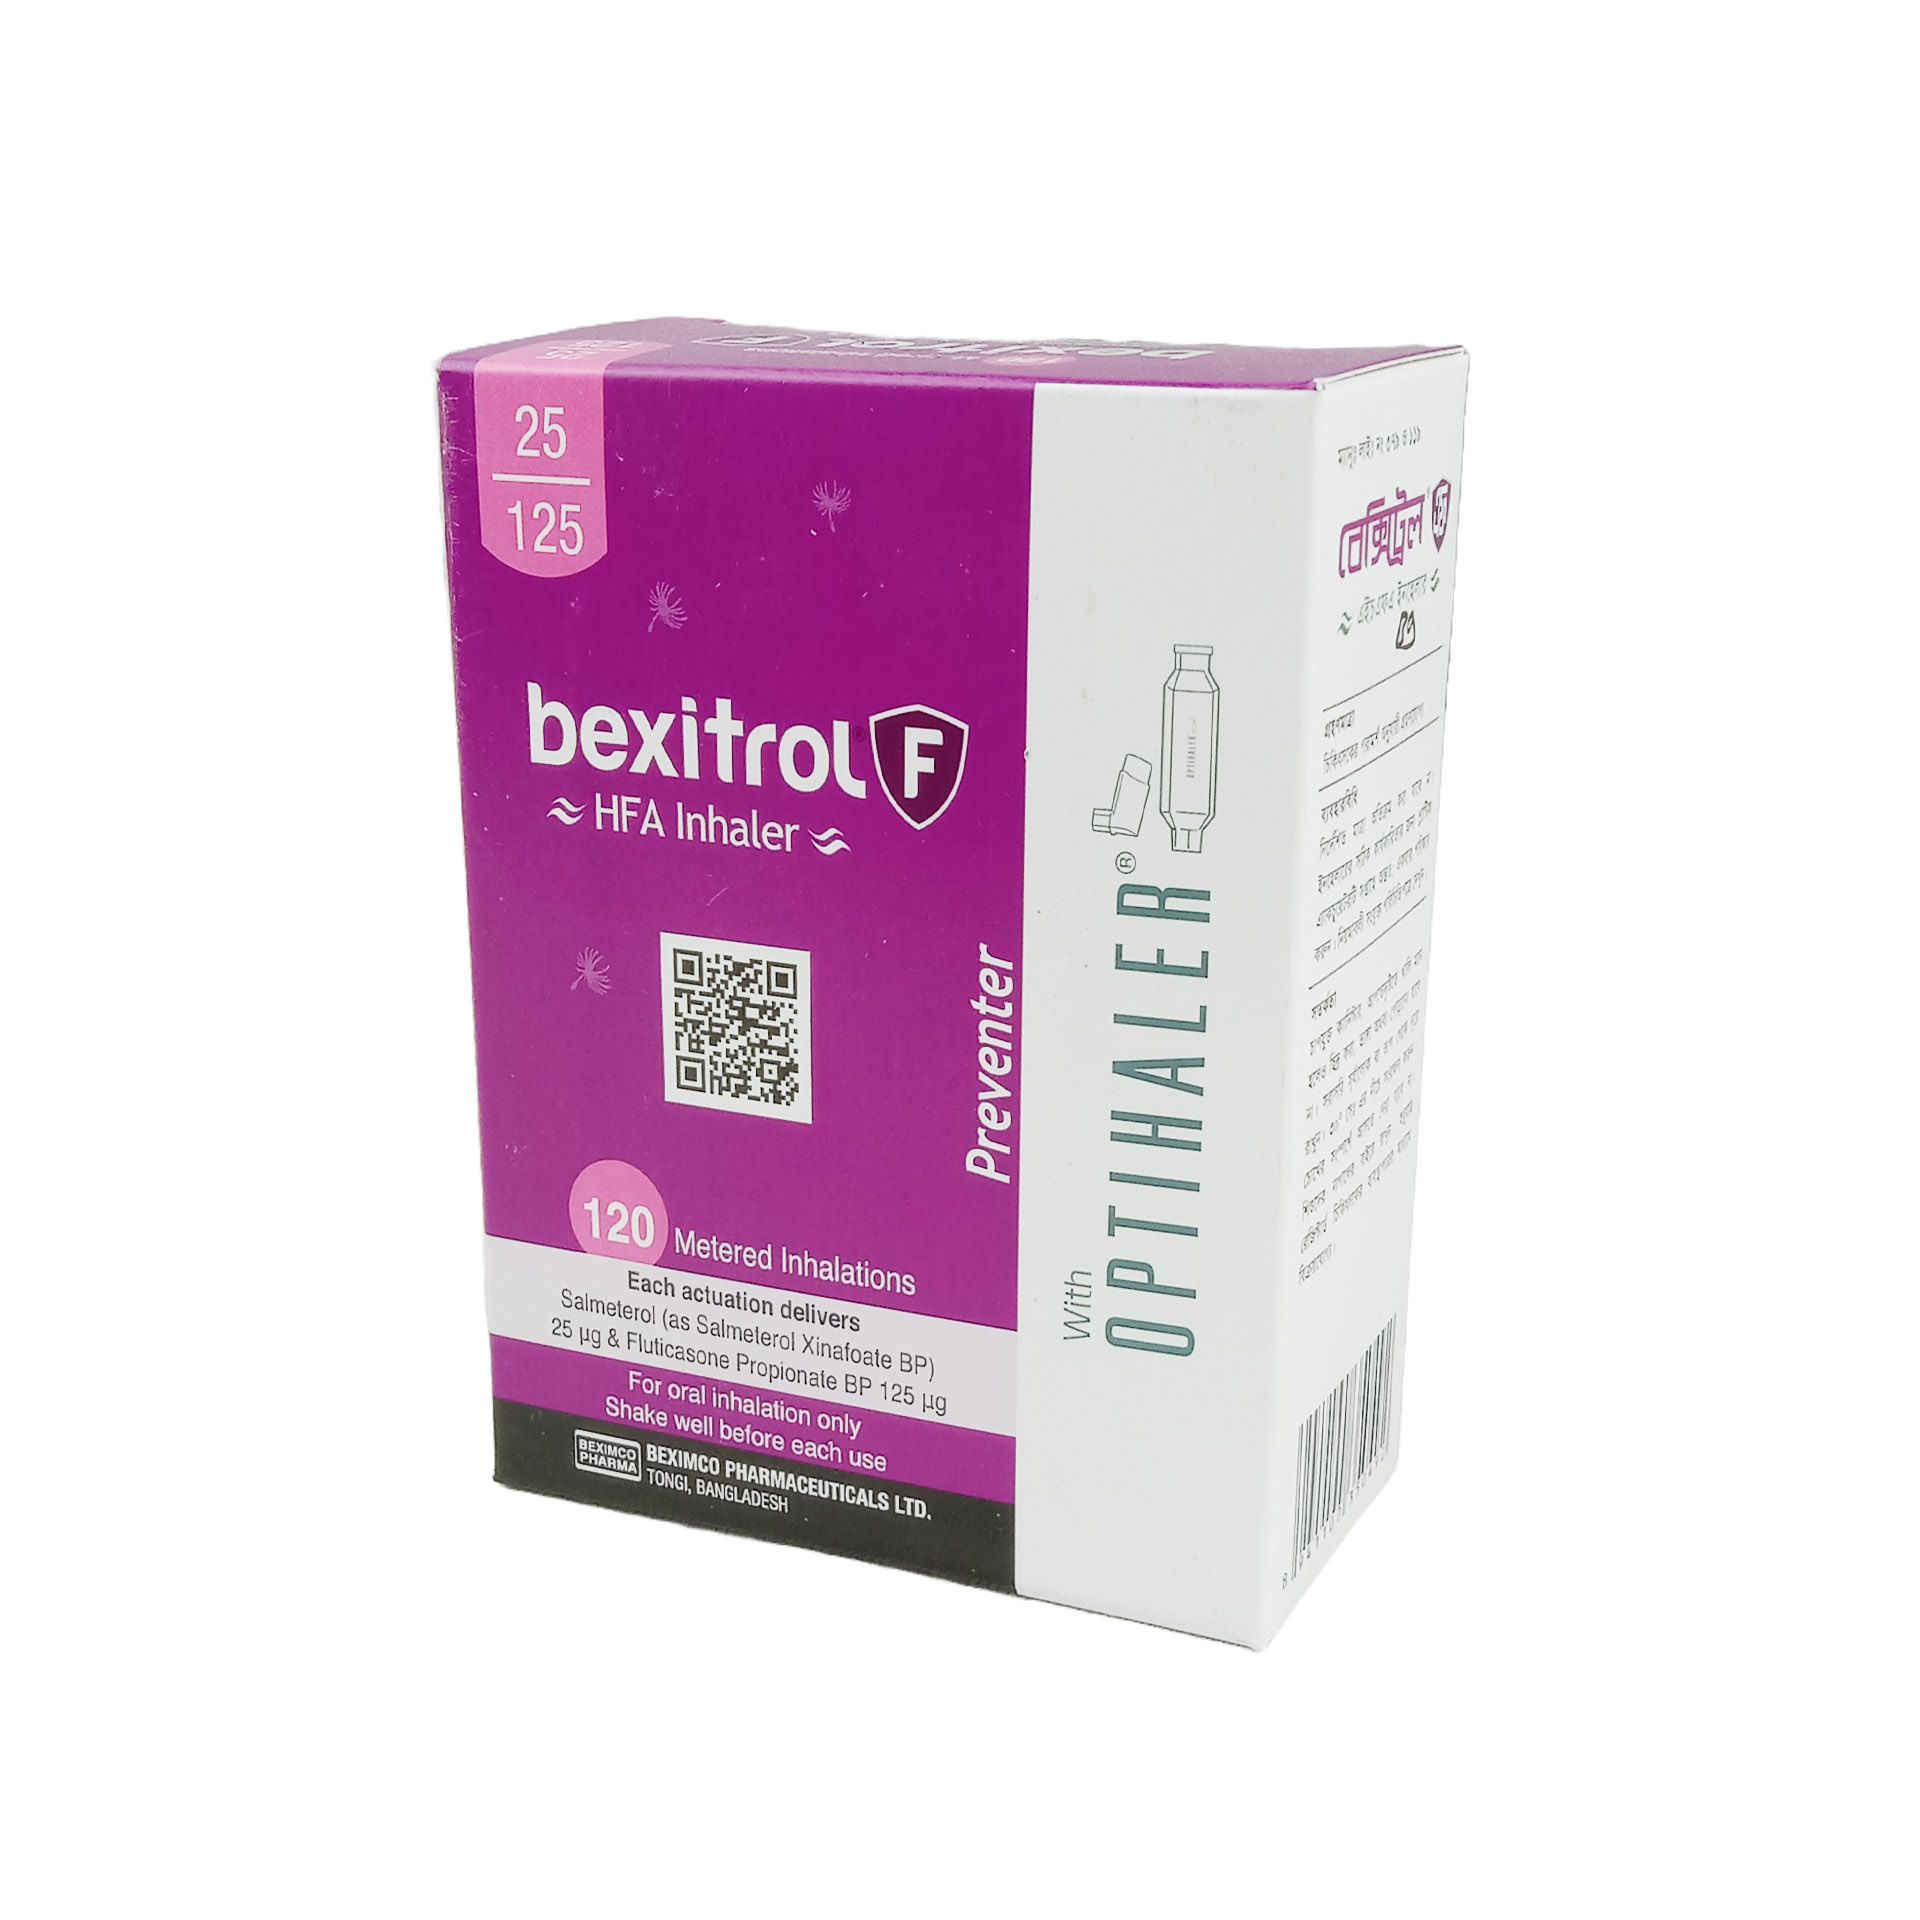 Bexitrol F 25/125 HFA Inhaler - (25mcg+125mcg/Puff)